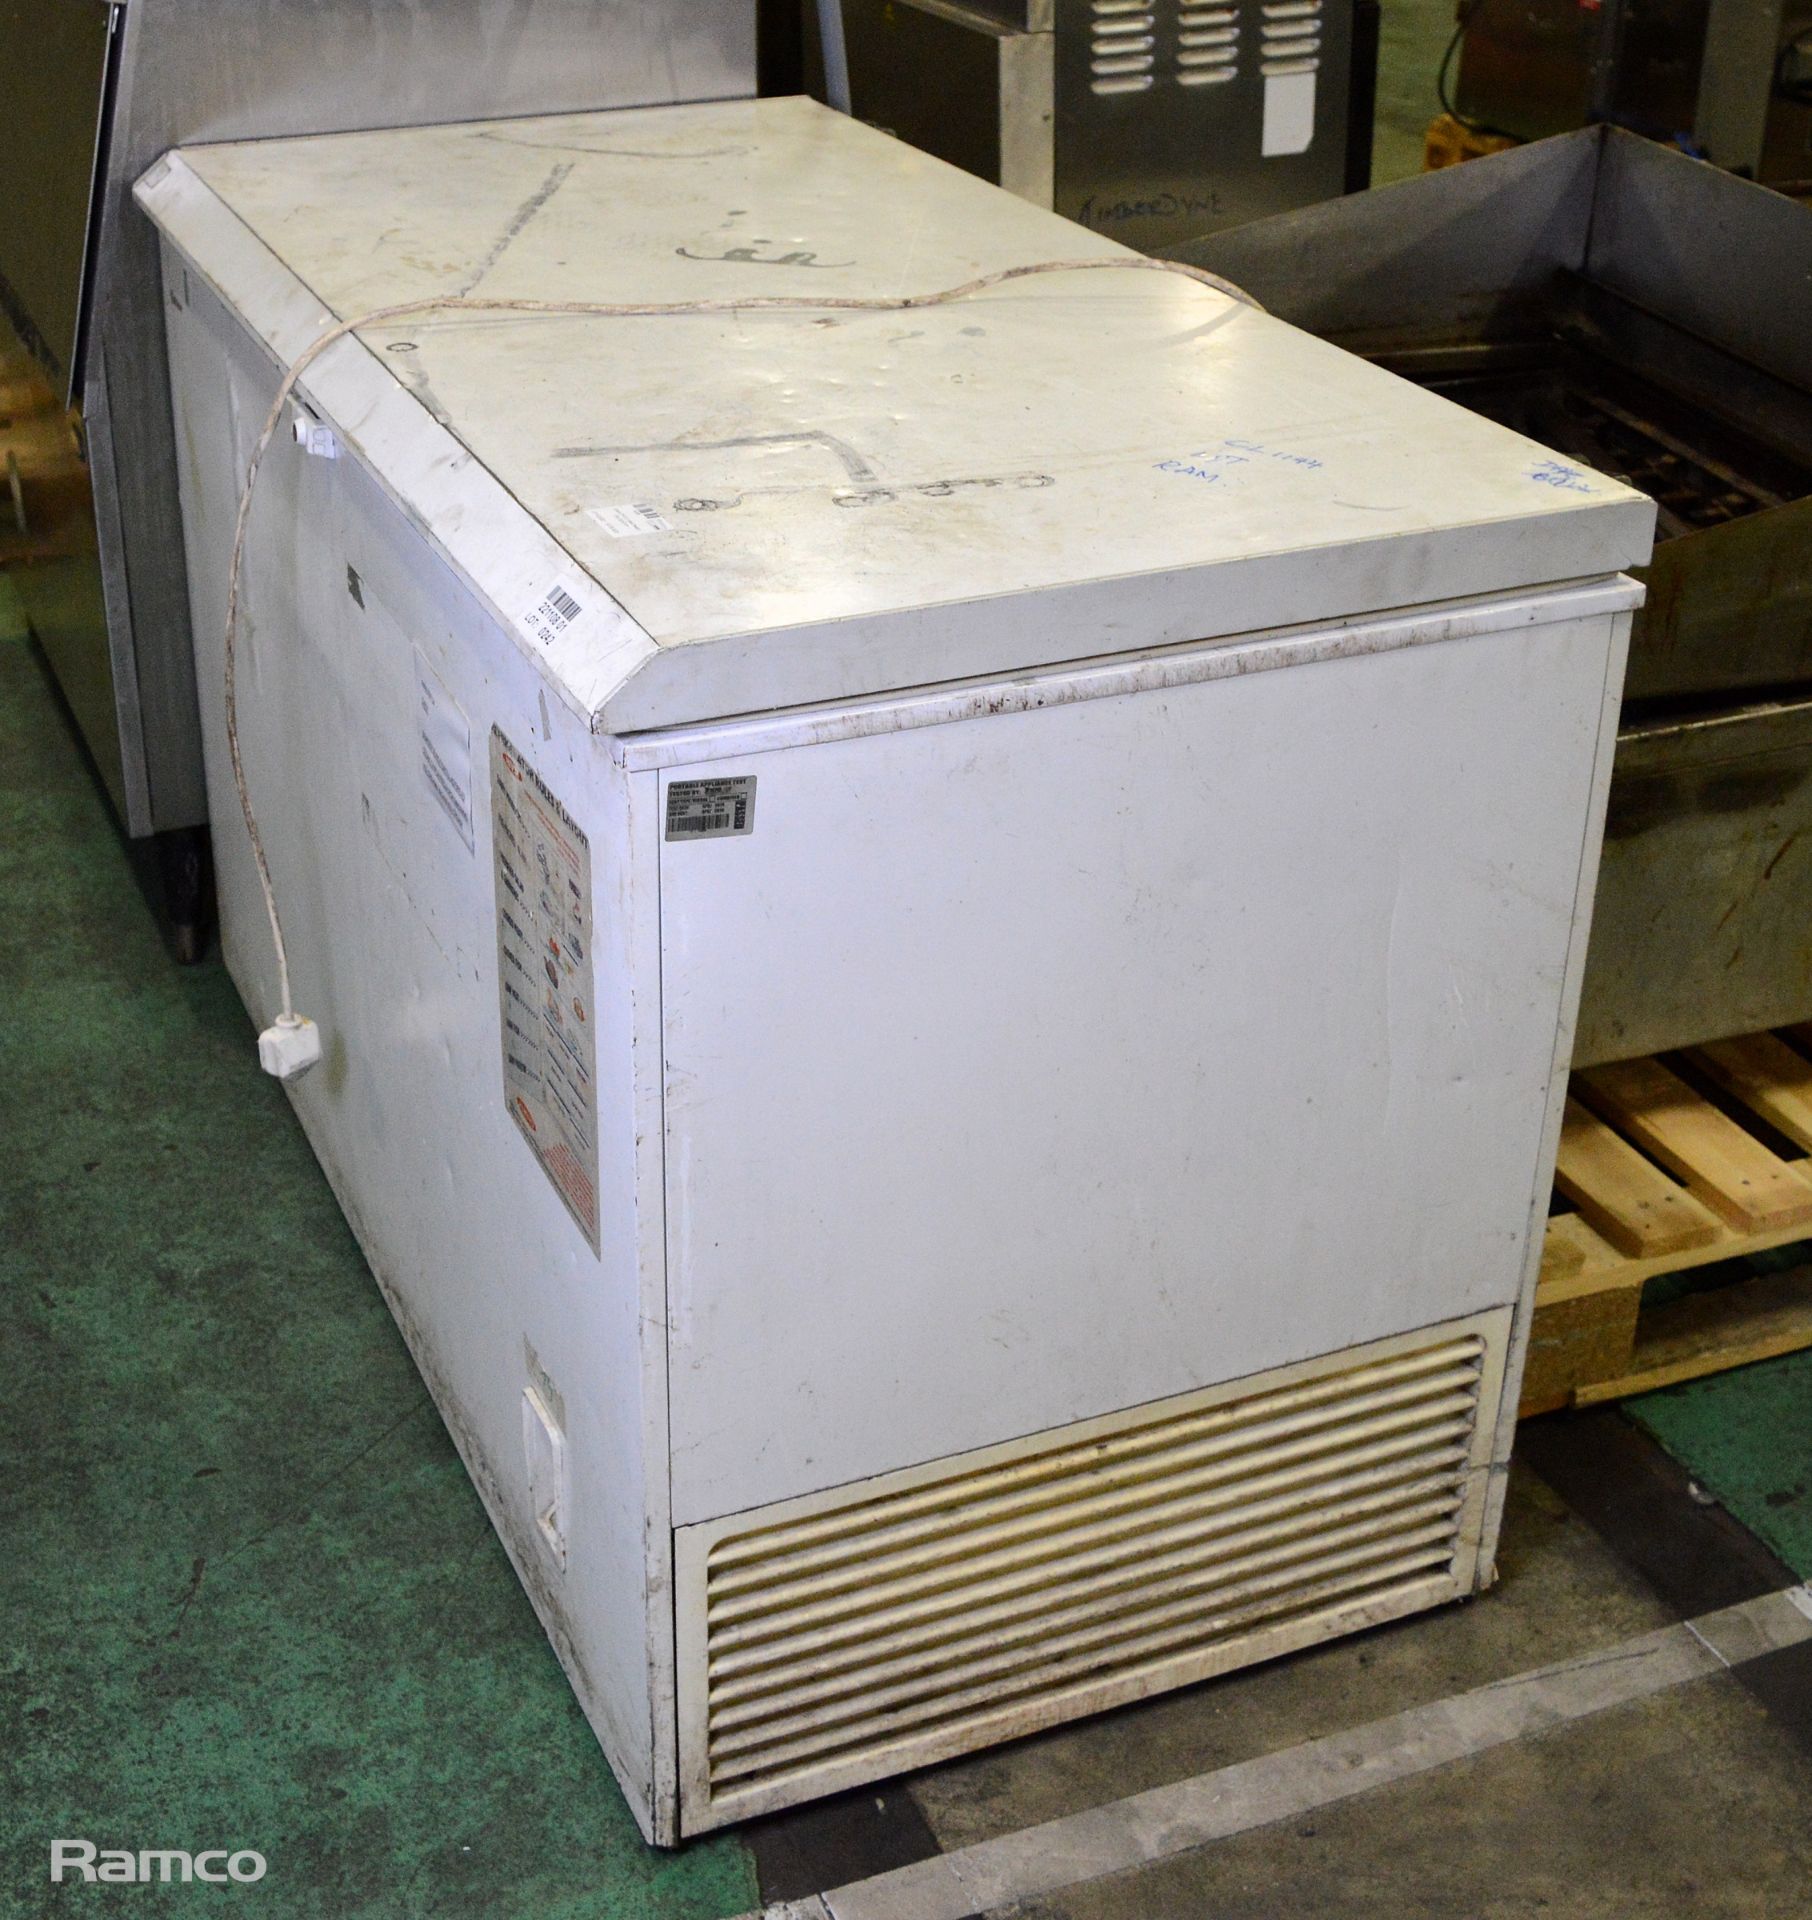 Gram CF410 chest freezer - 73x132x87cm - Image 4 of 5